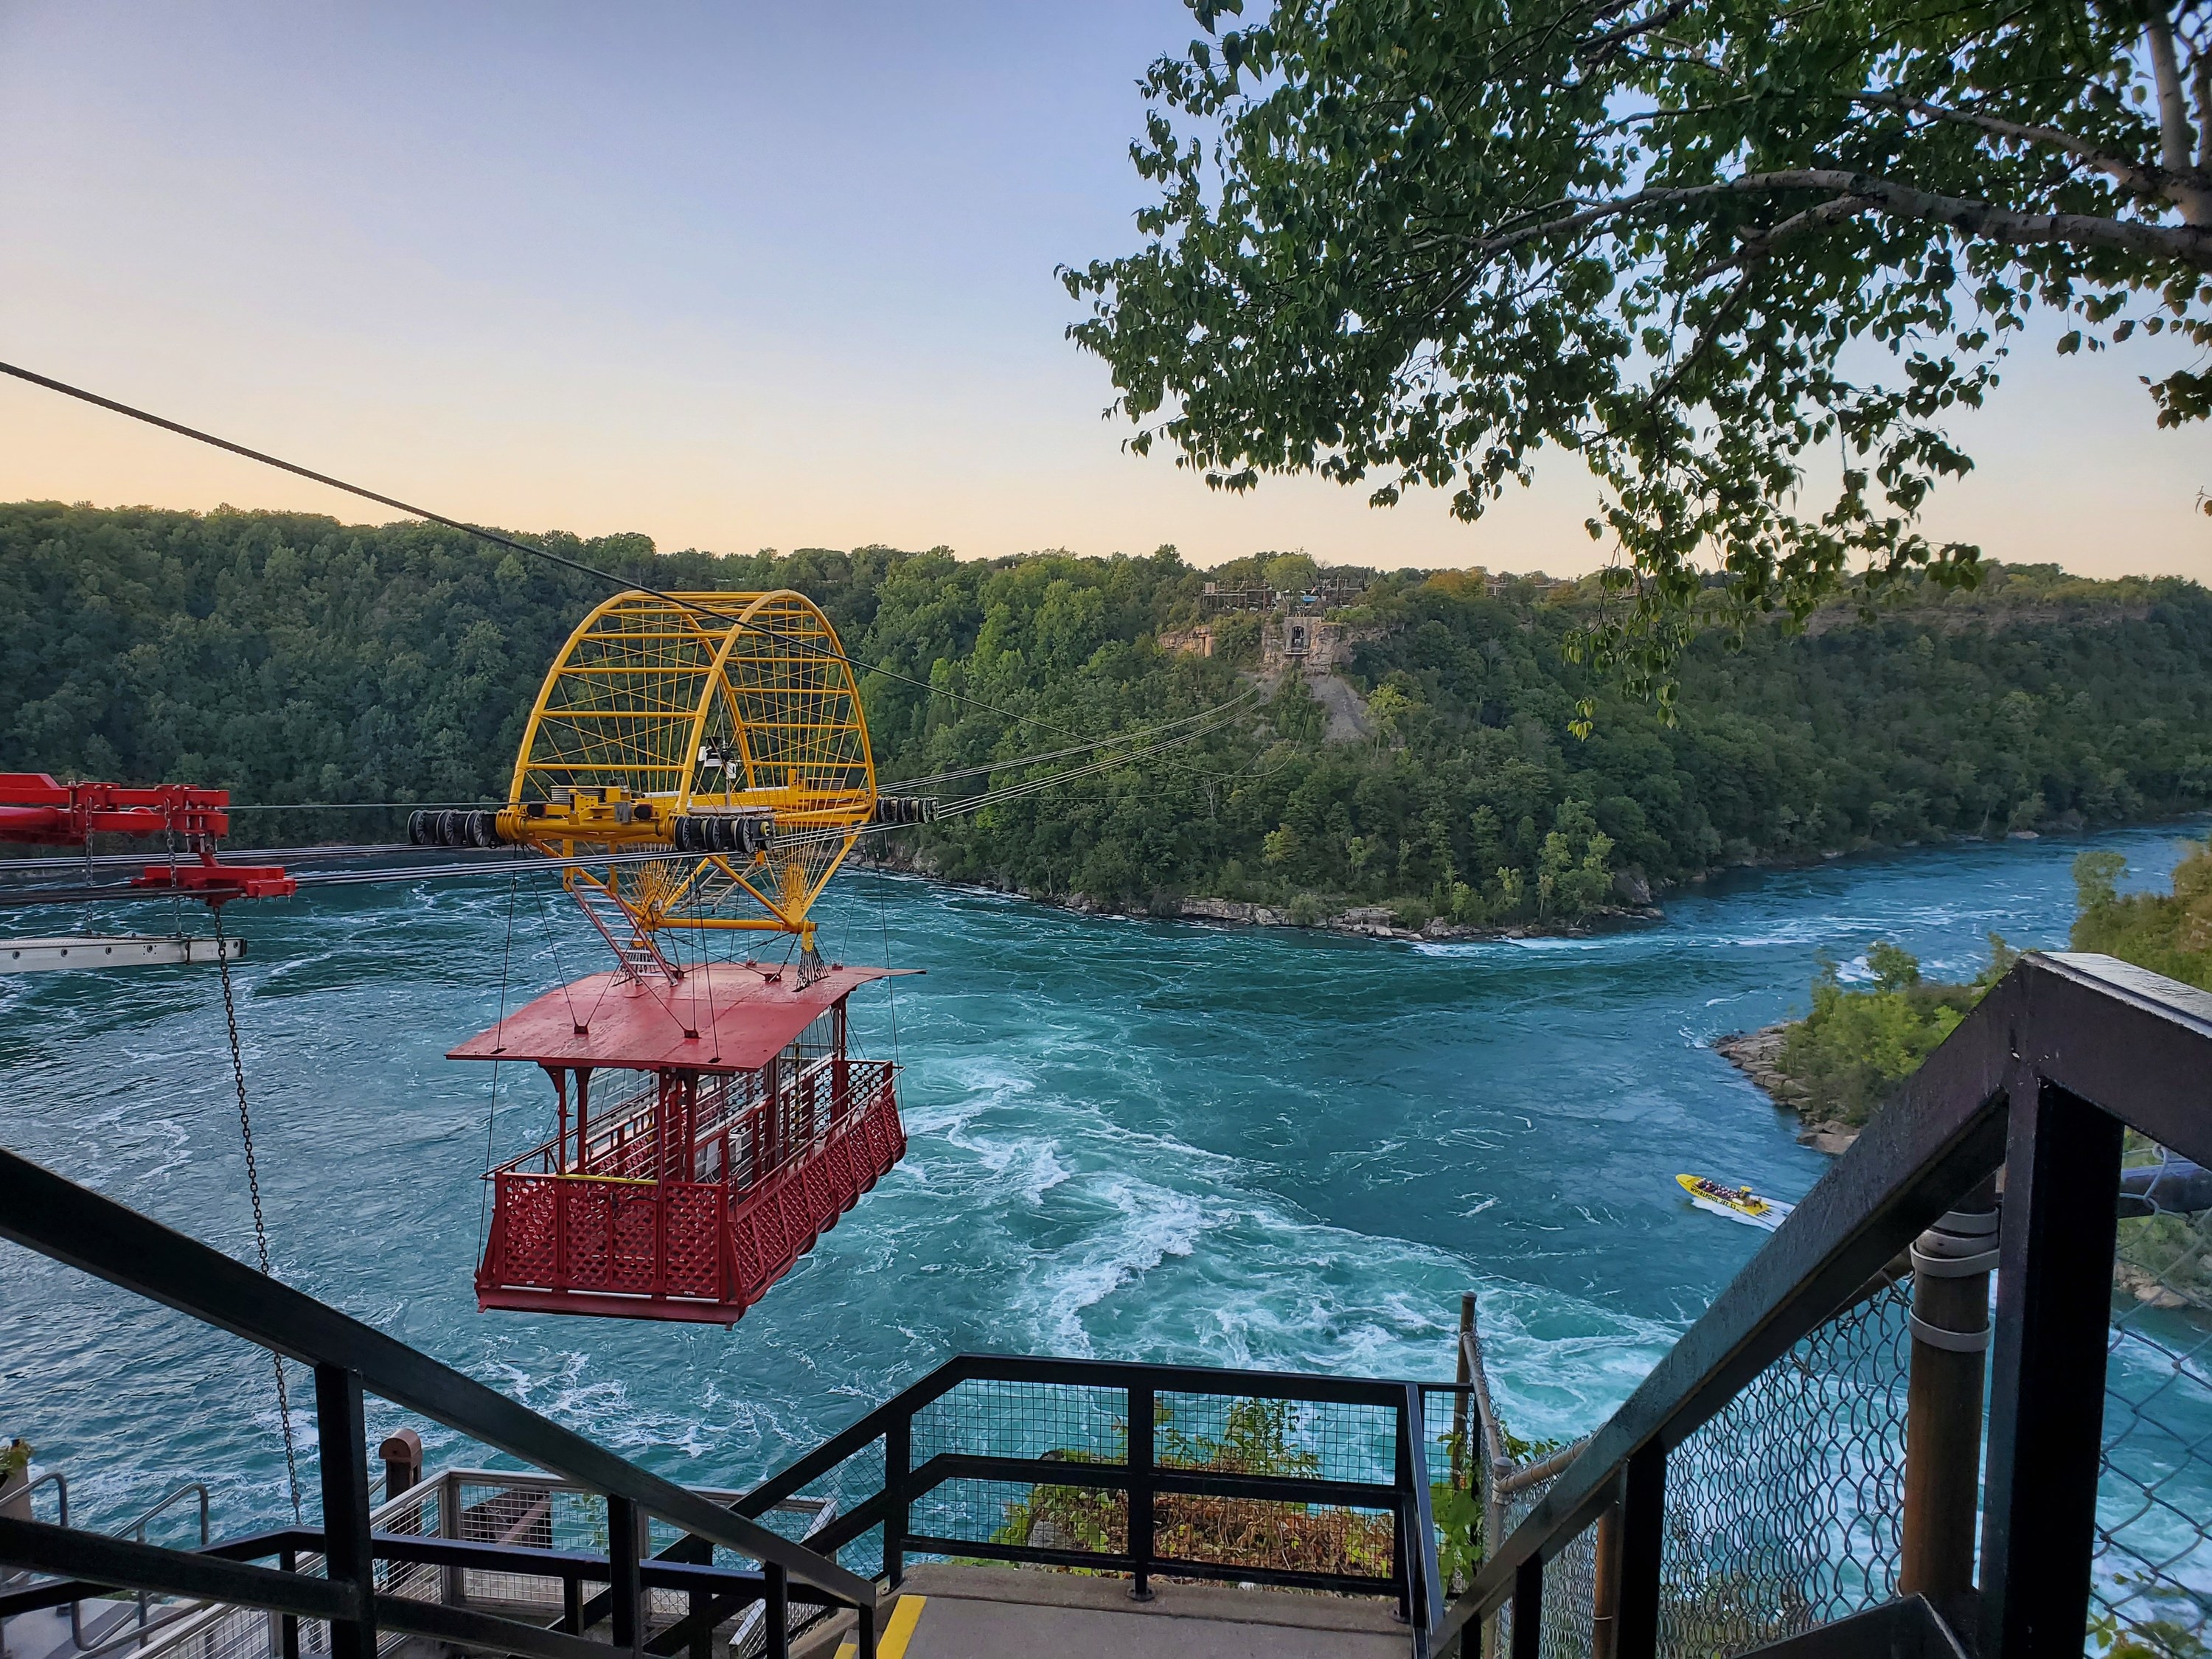 Picture of Aero Car and Niagara Whirlpool (part of Niagara River)